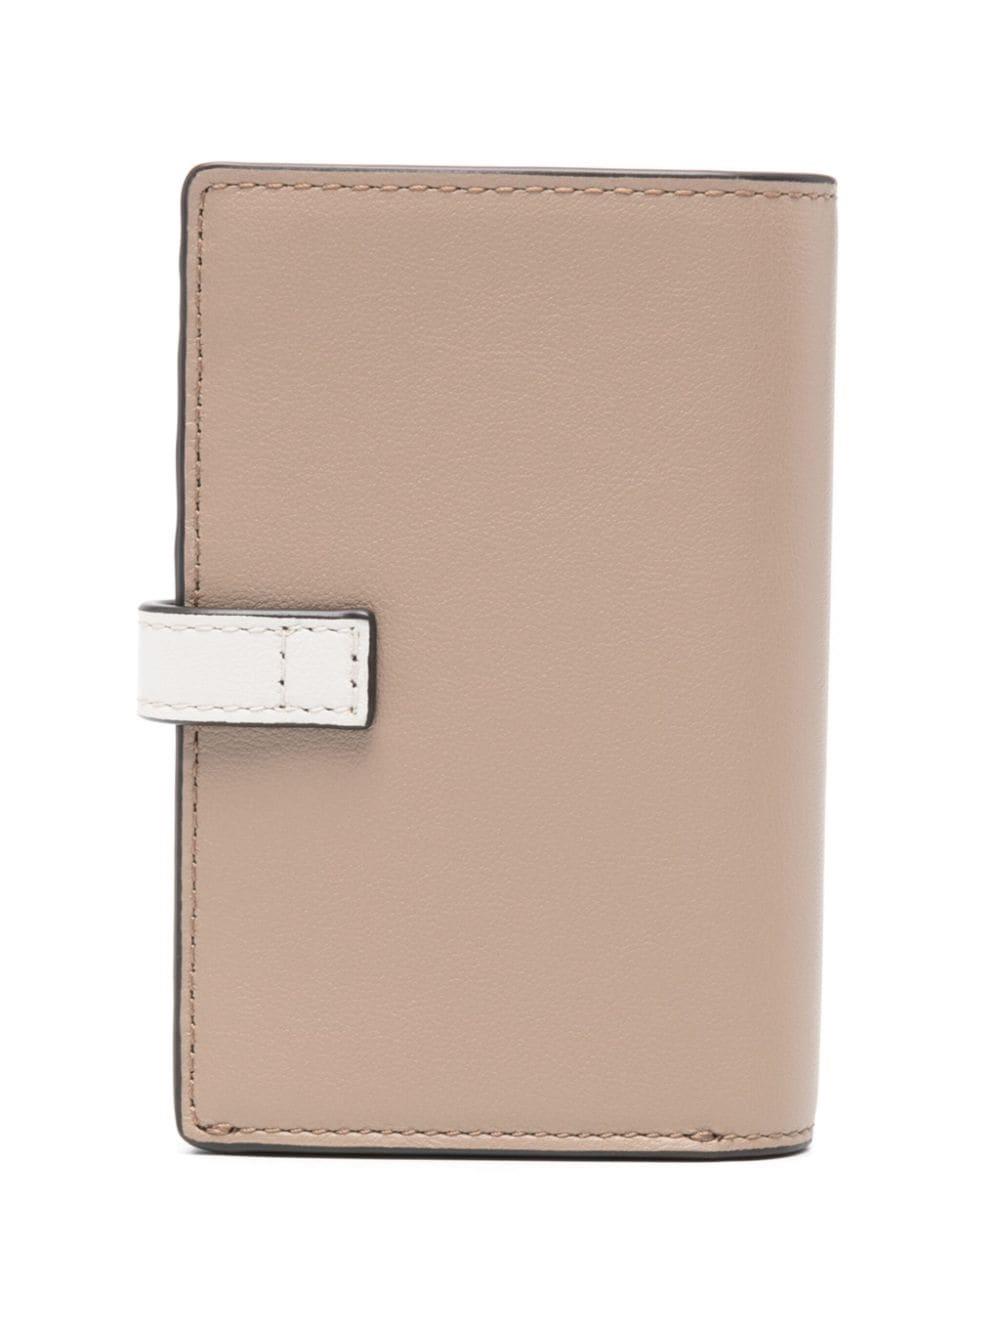 Furla Flow leather wallet - Brown